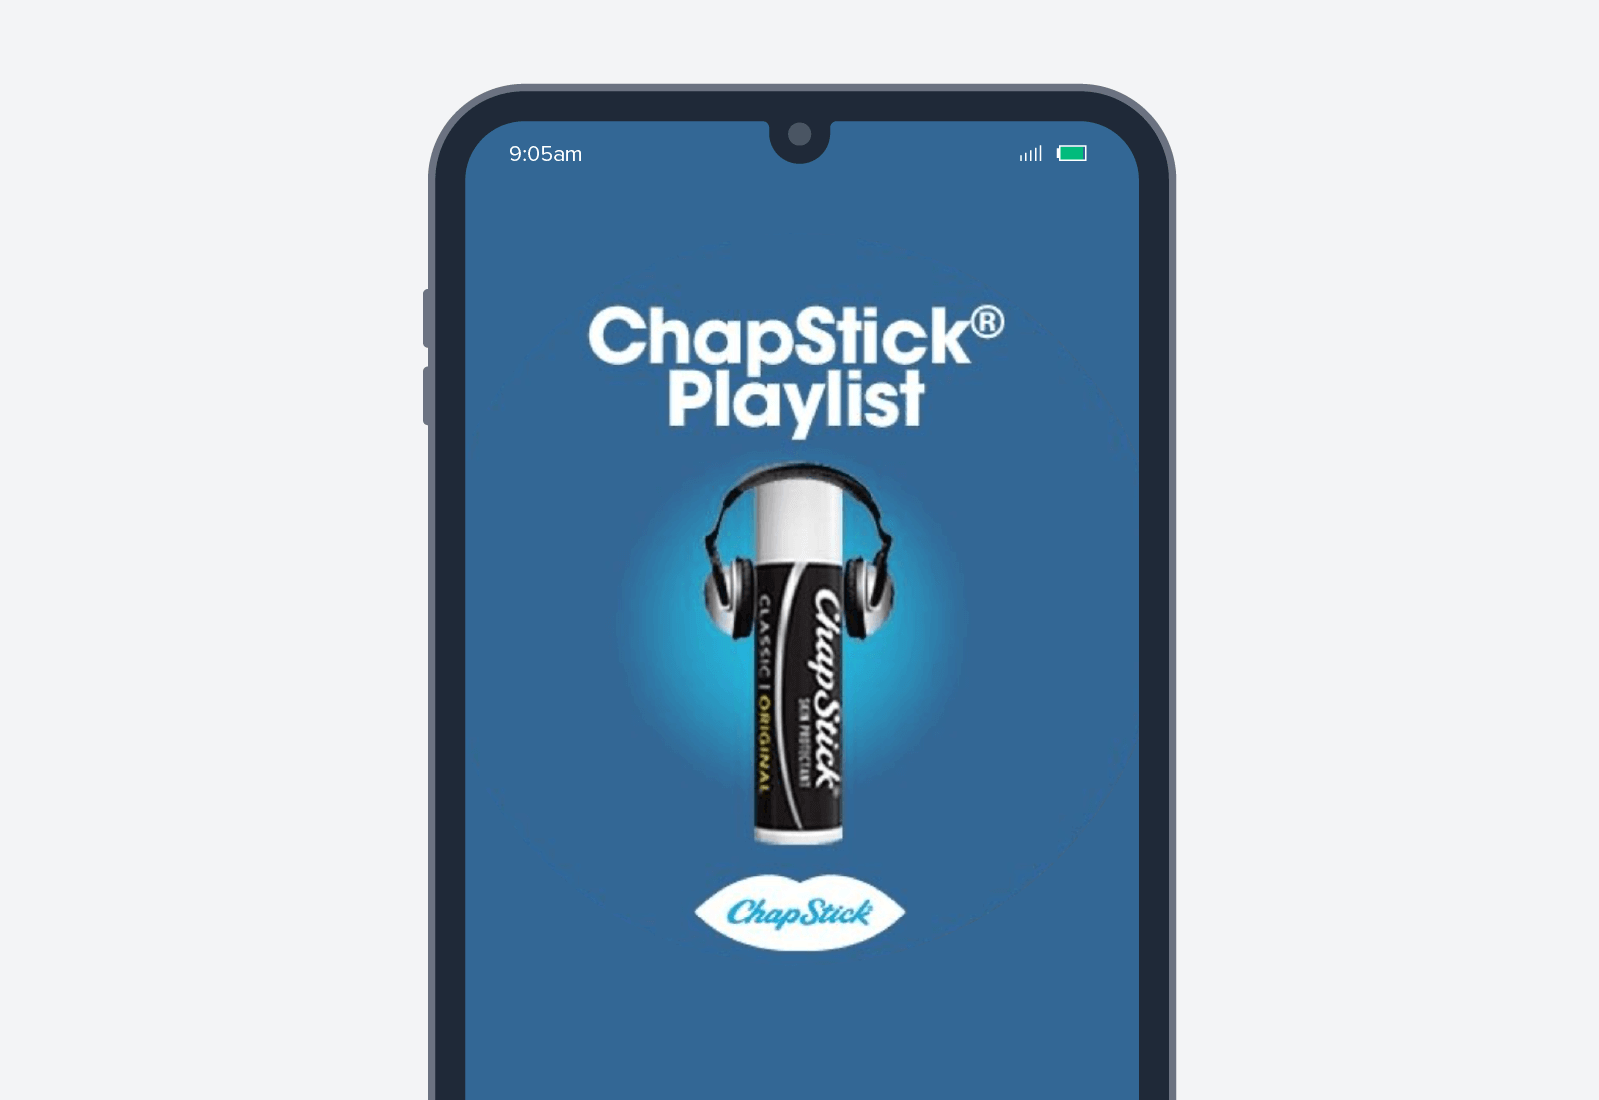 chapstick mobile advertisement